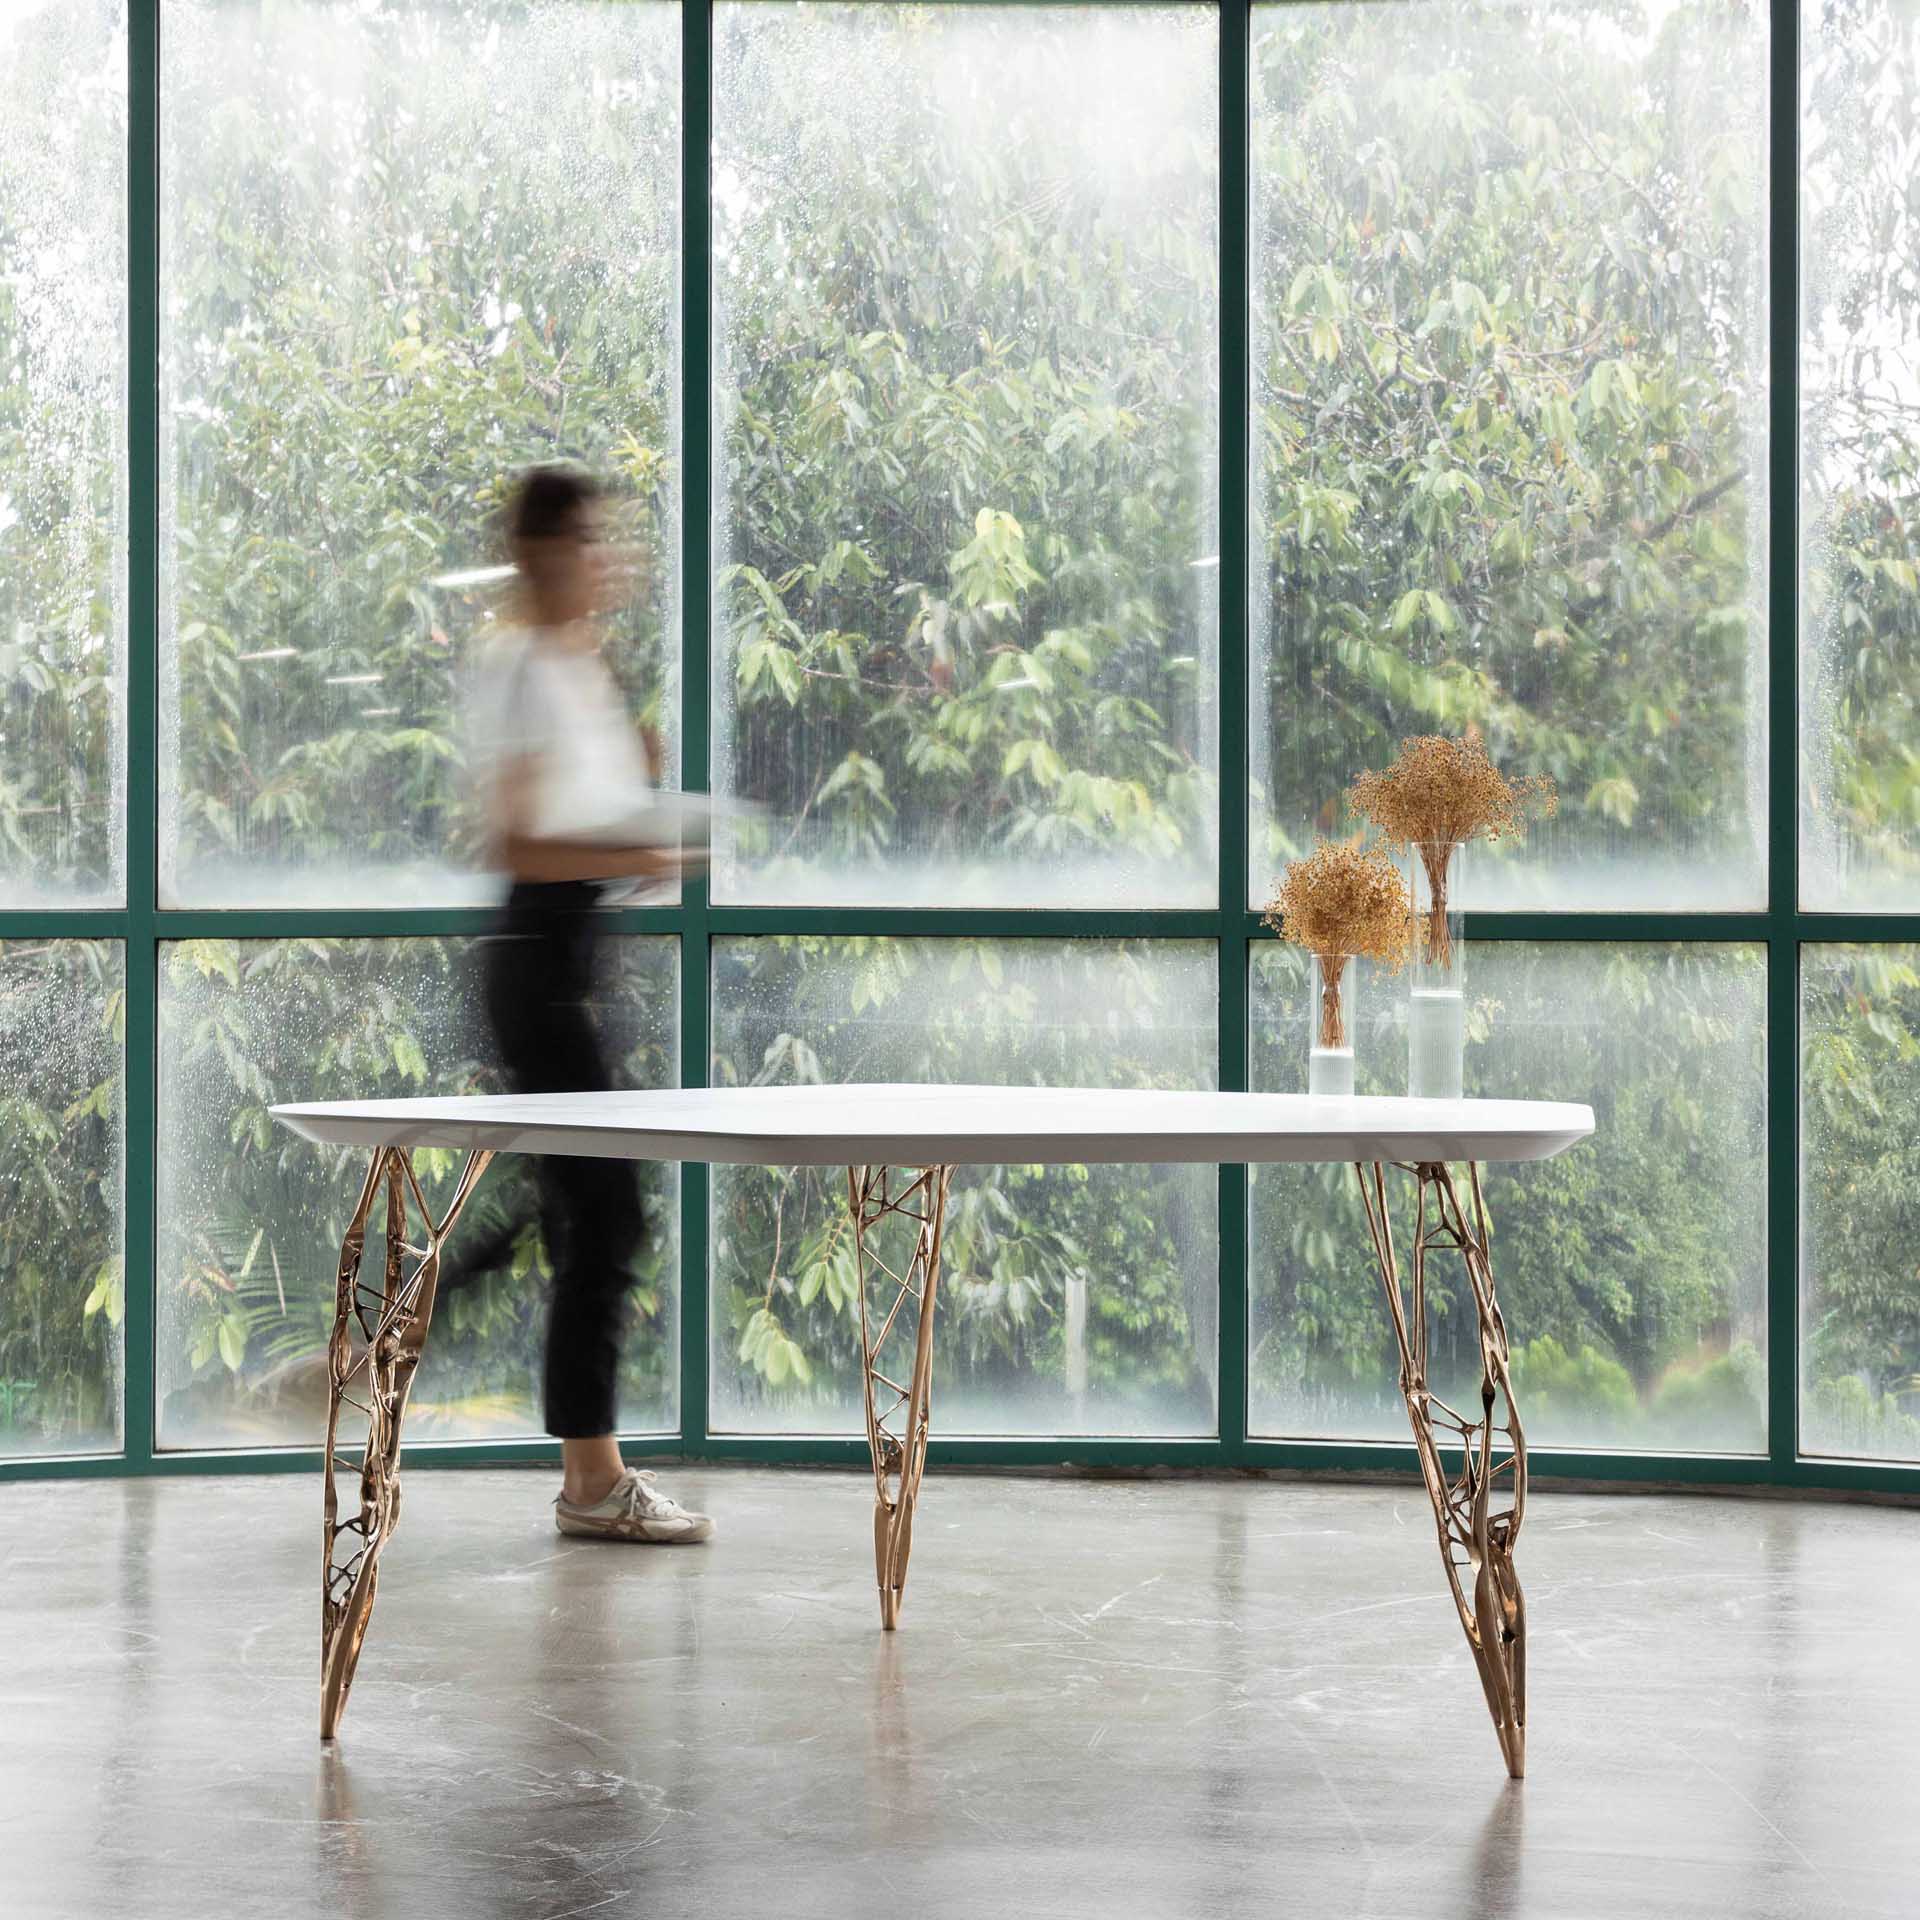 Aitable Furniture by Carlos Banon and Felix Raspall